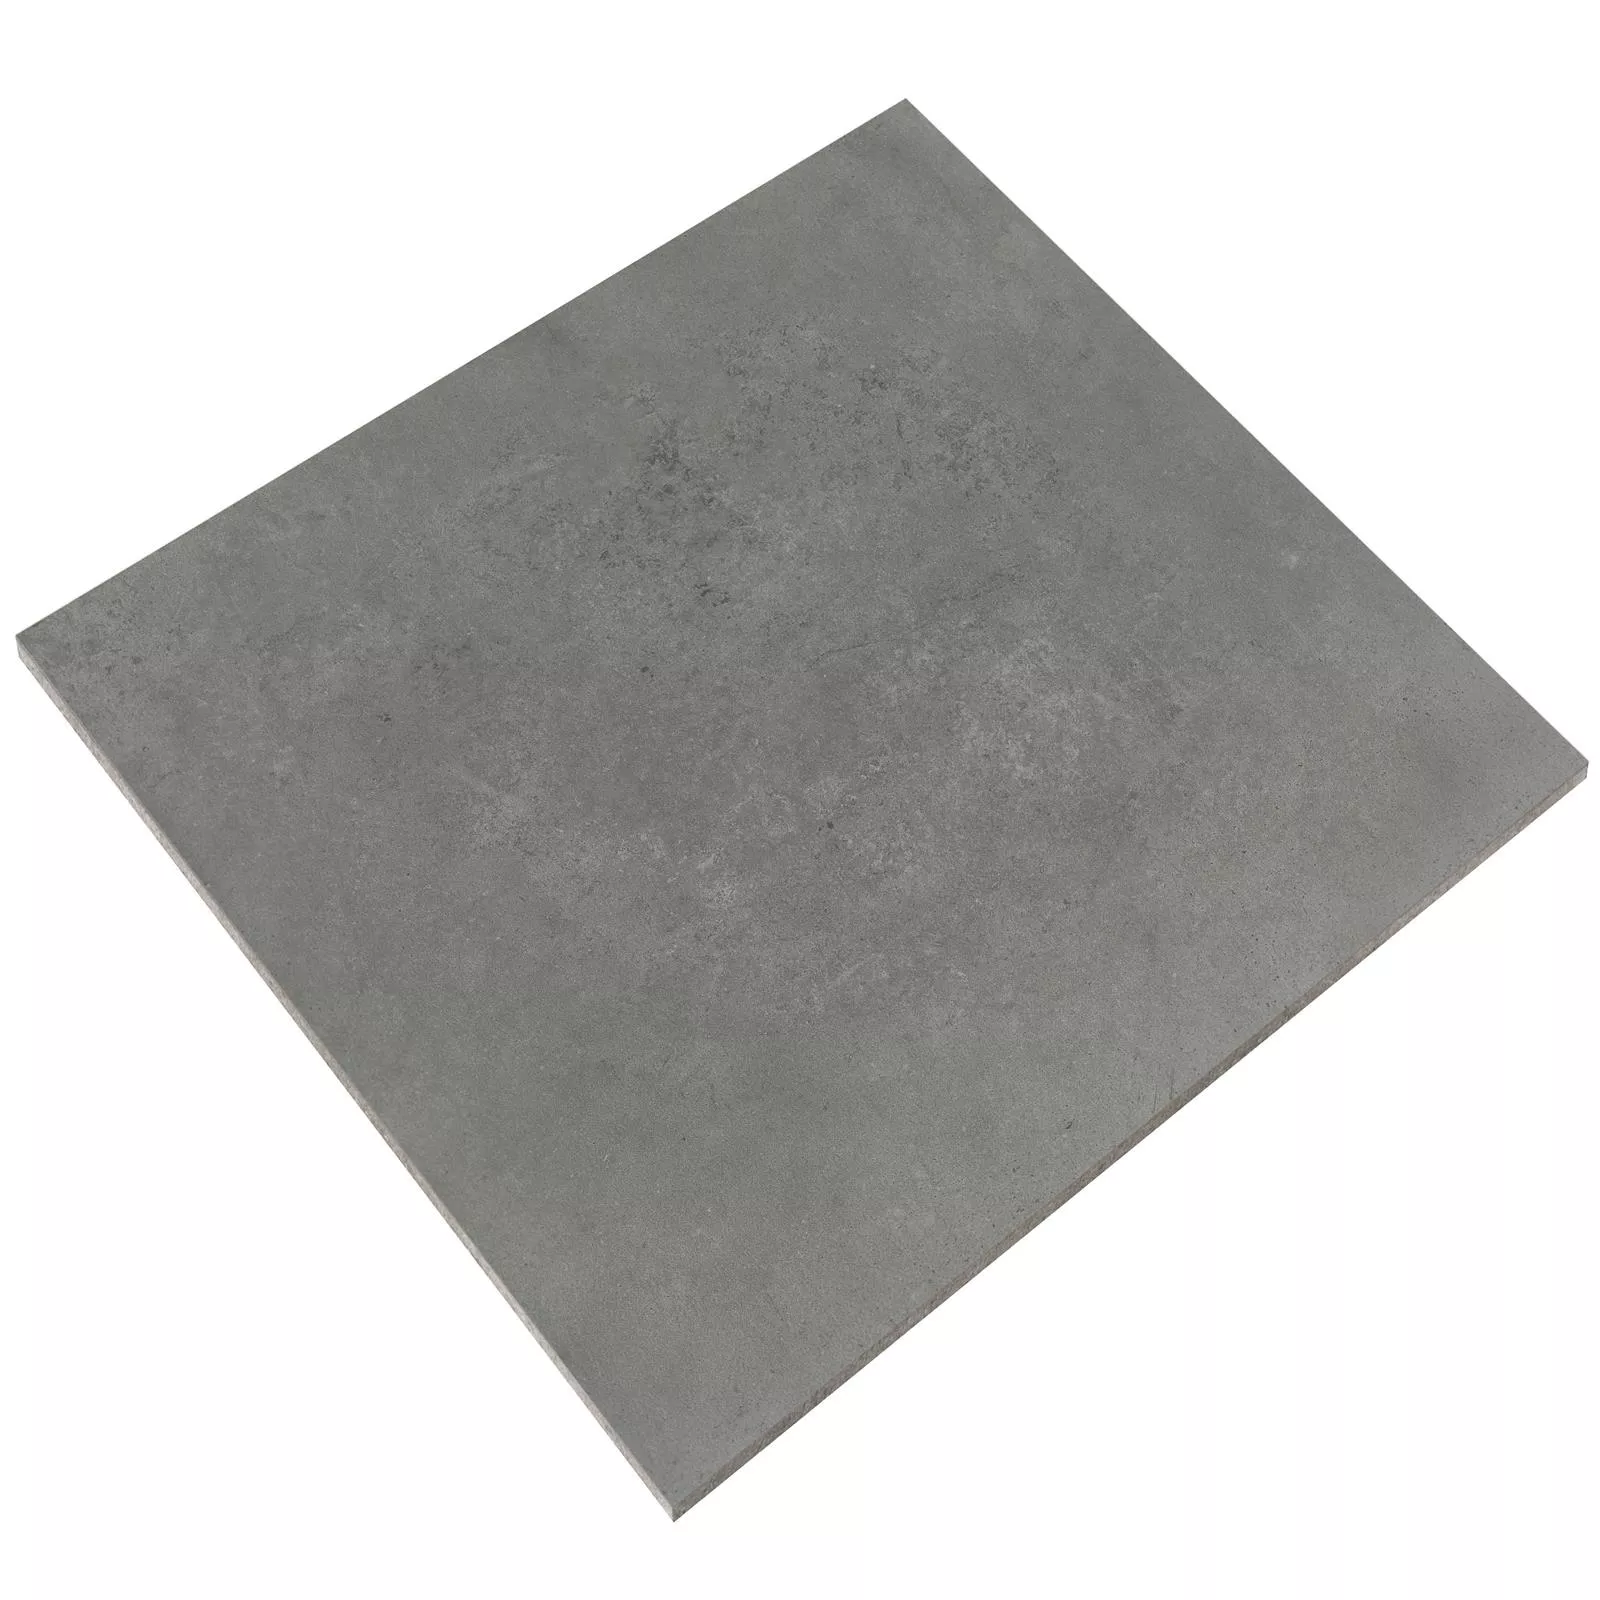 Sample Vloertegels Cement Optic Nepal Slim Donkergrijs 60x60cm